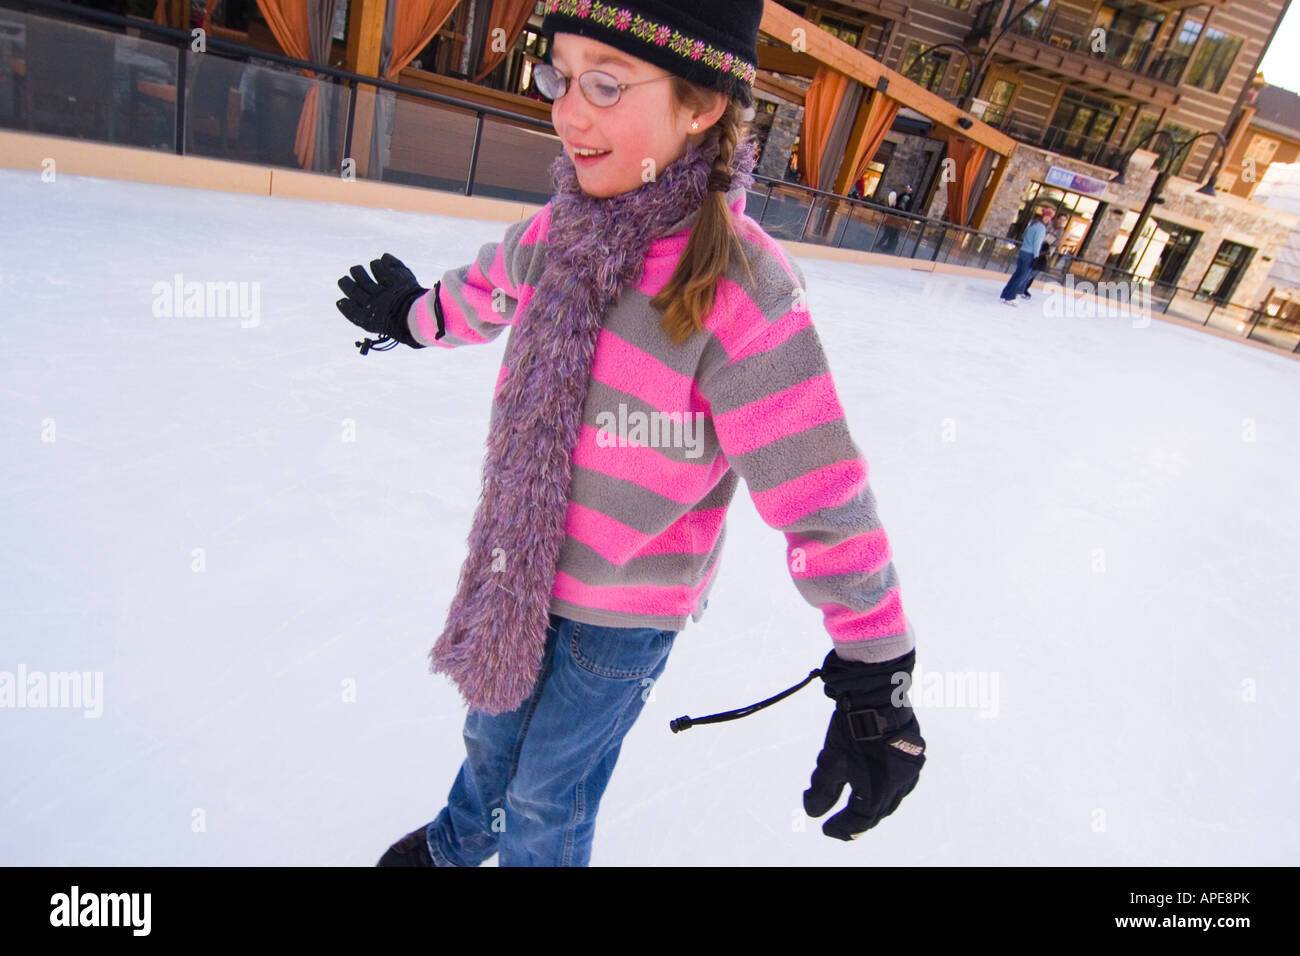 A young girl ice skating at Northstar ski resort near Lake Tahoe in California Stock Photo